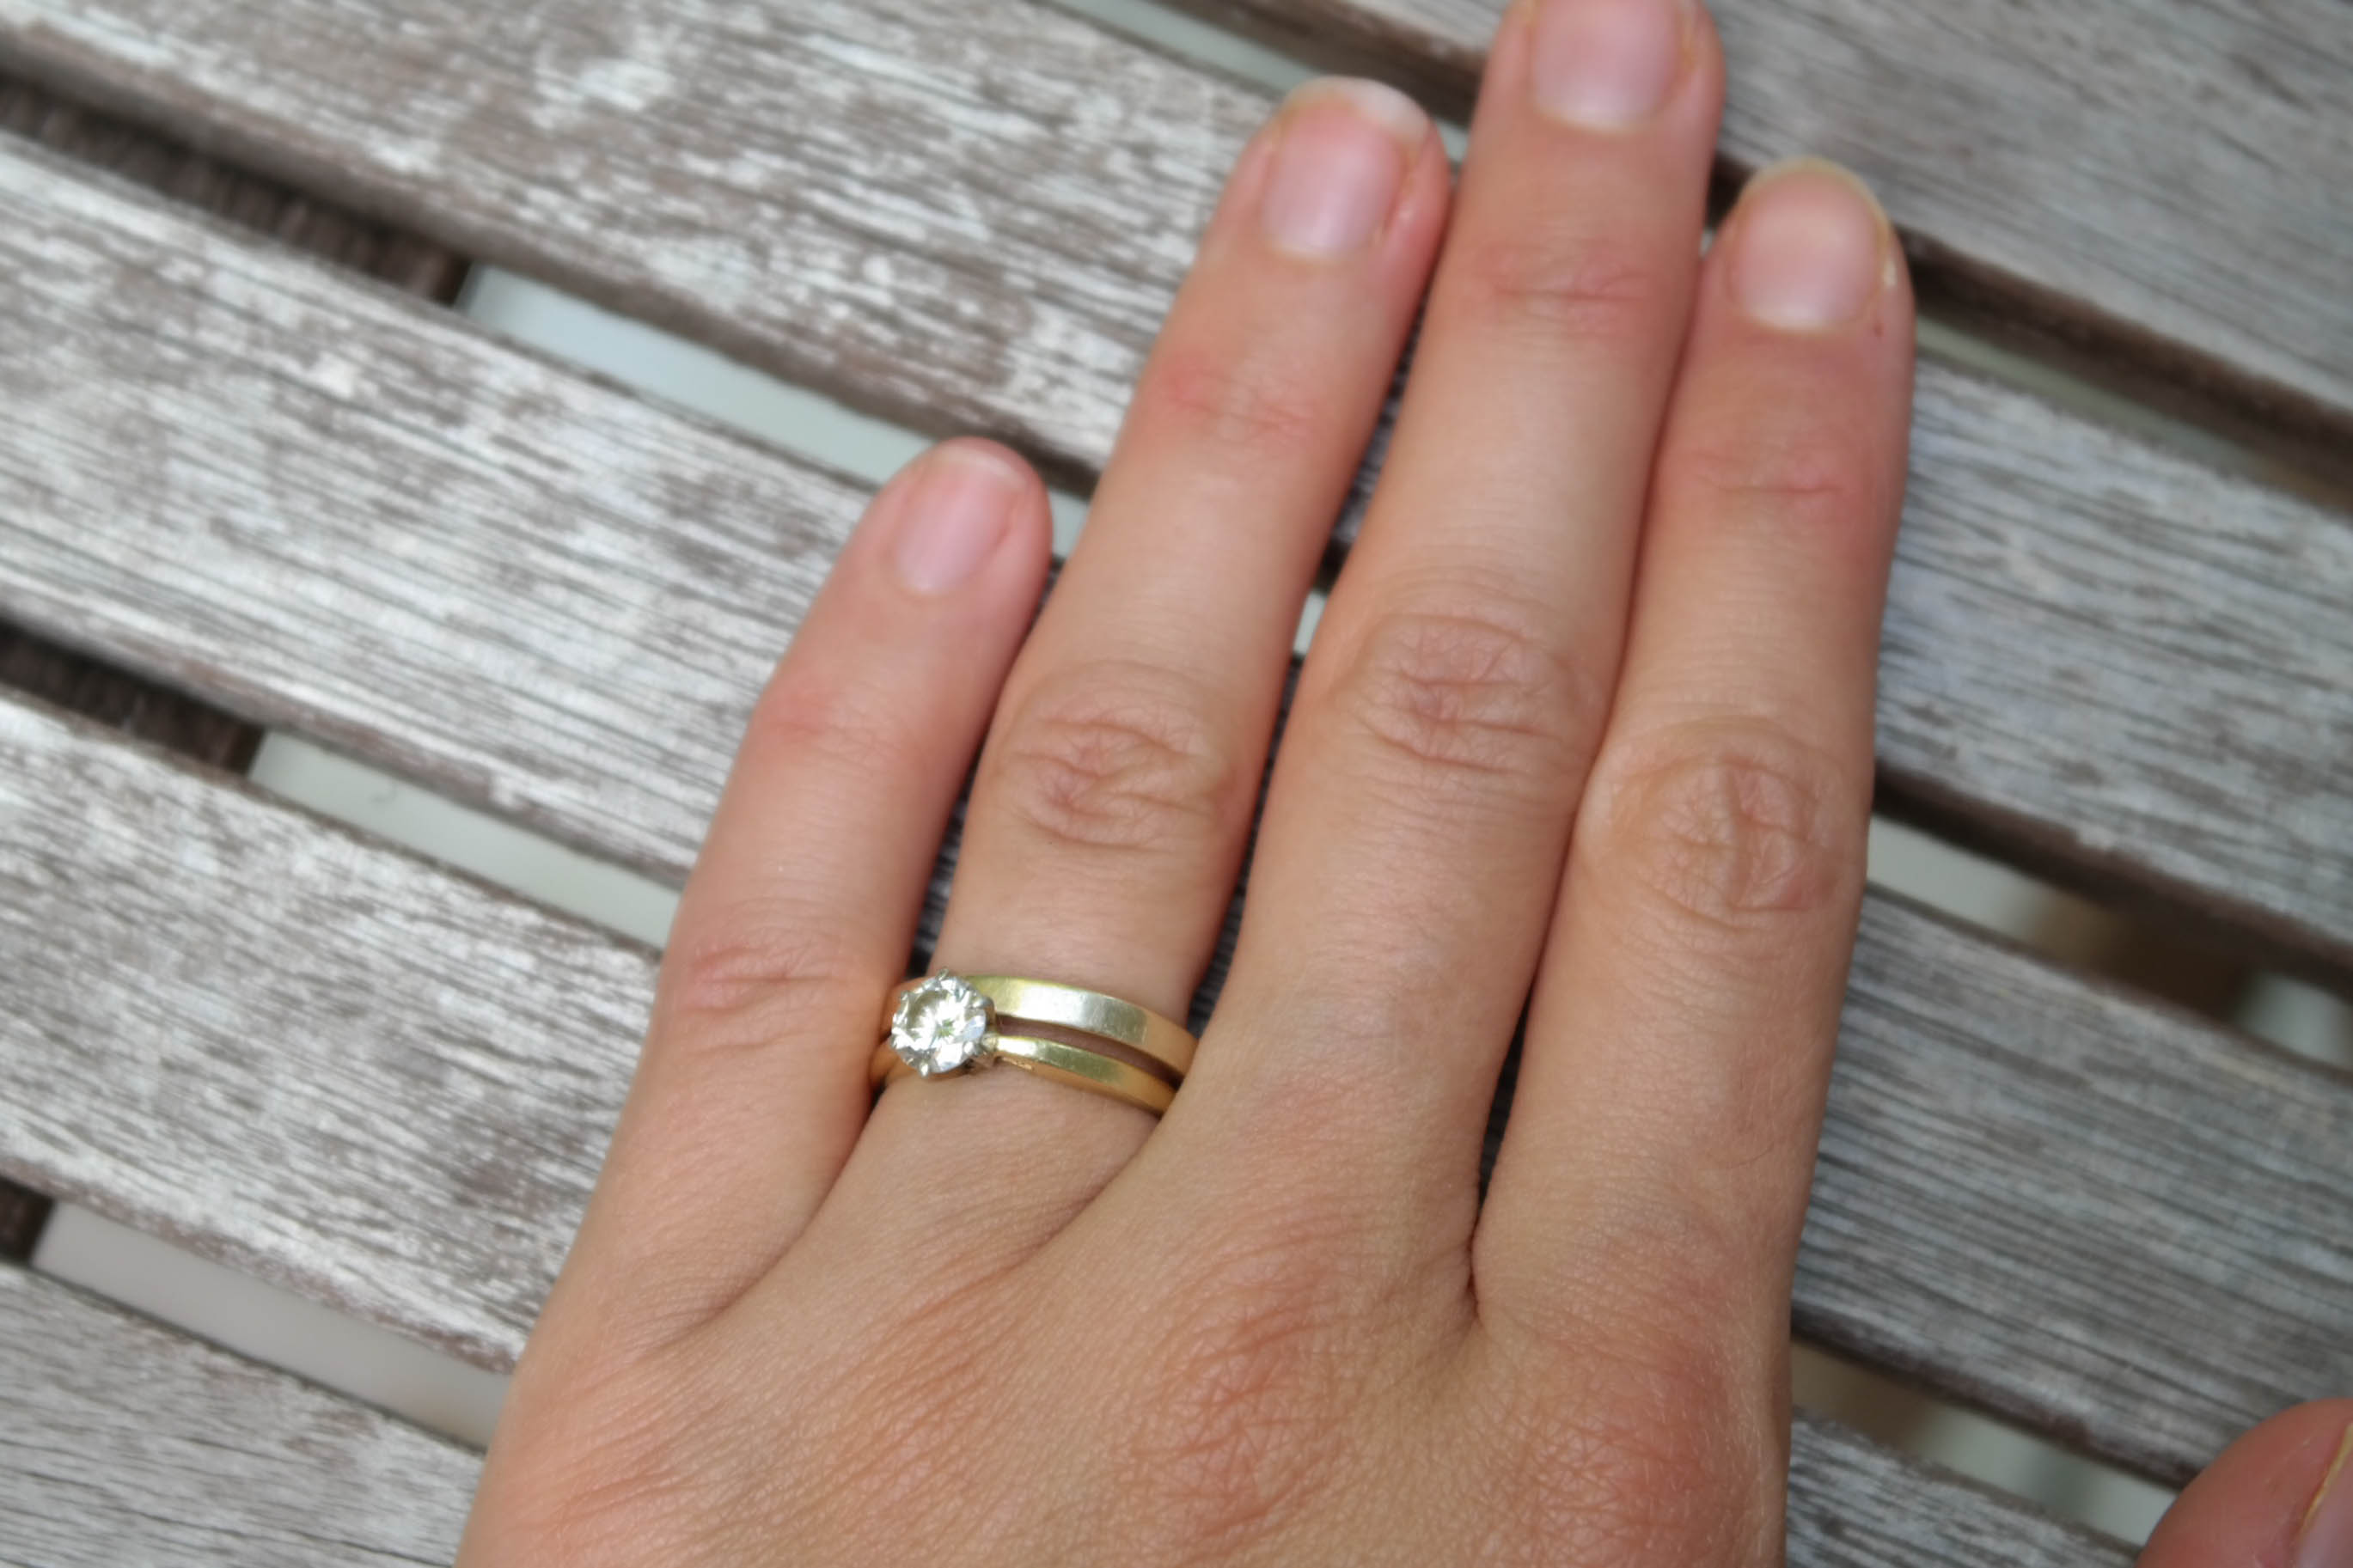 Wedding ring turns my finger black